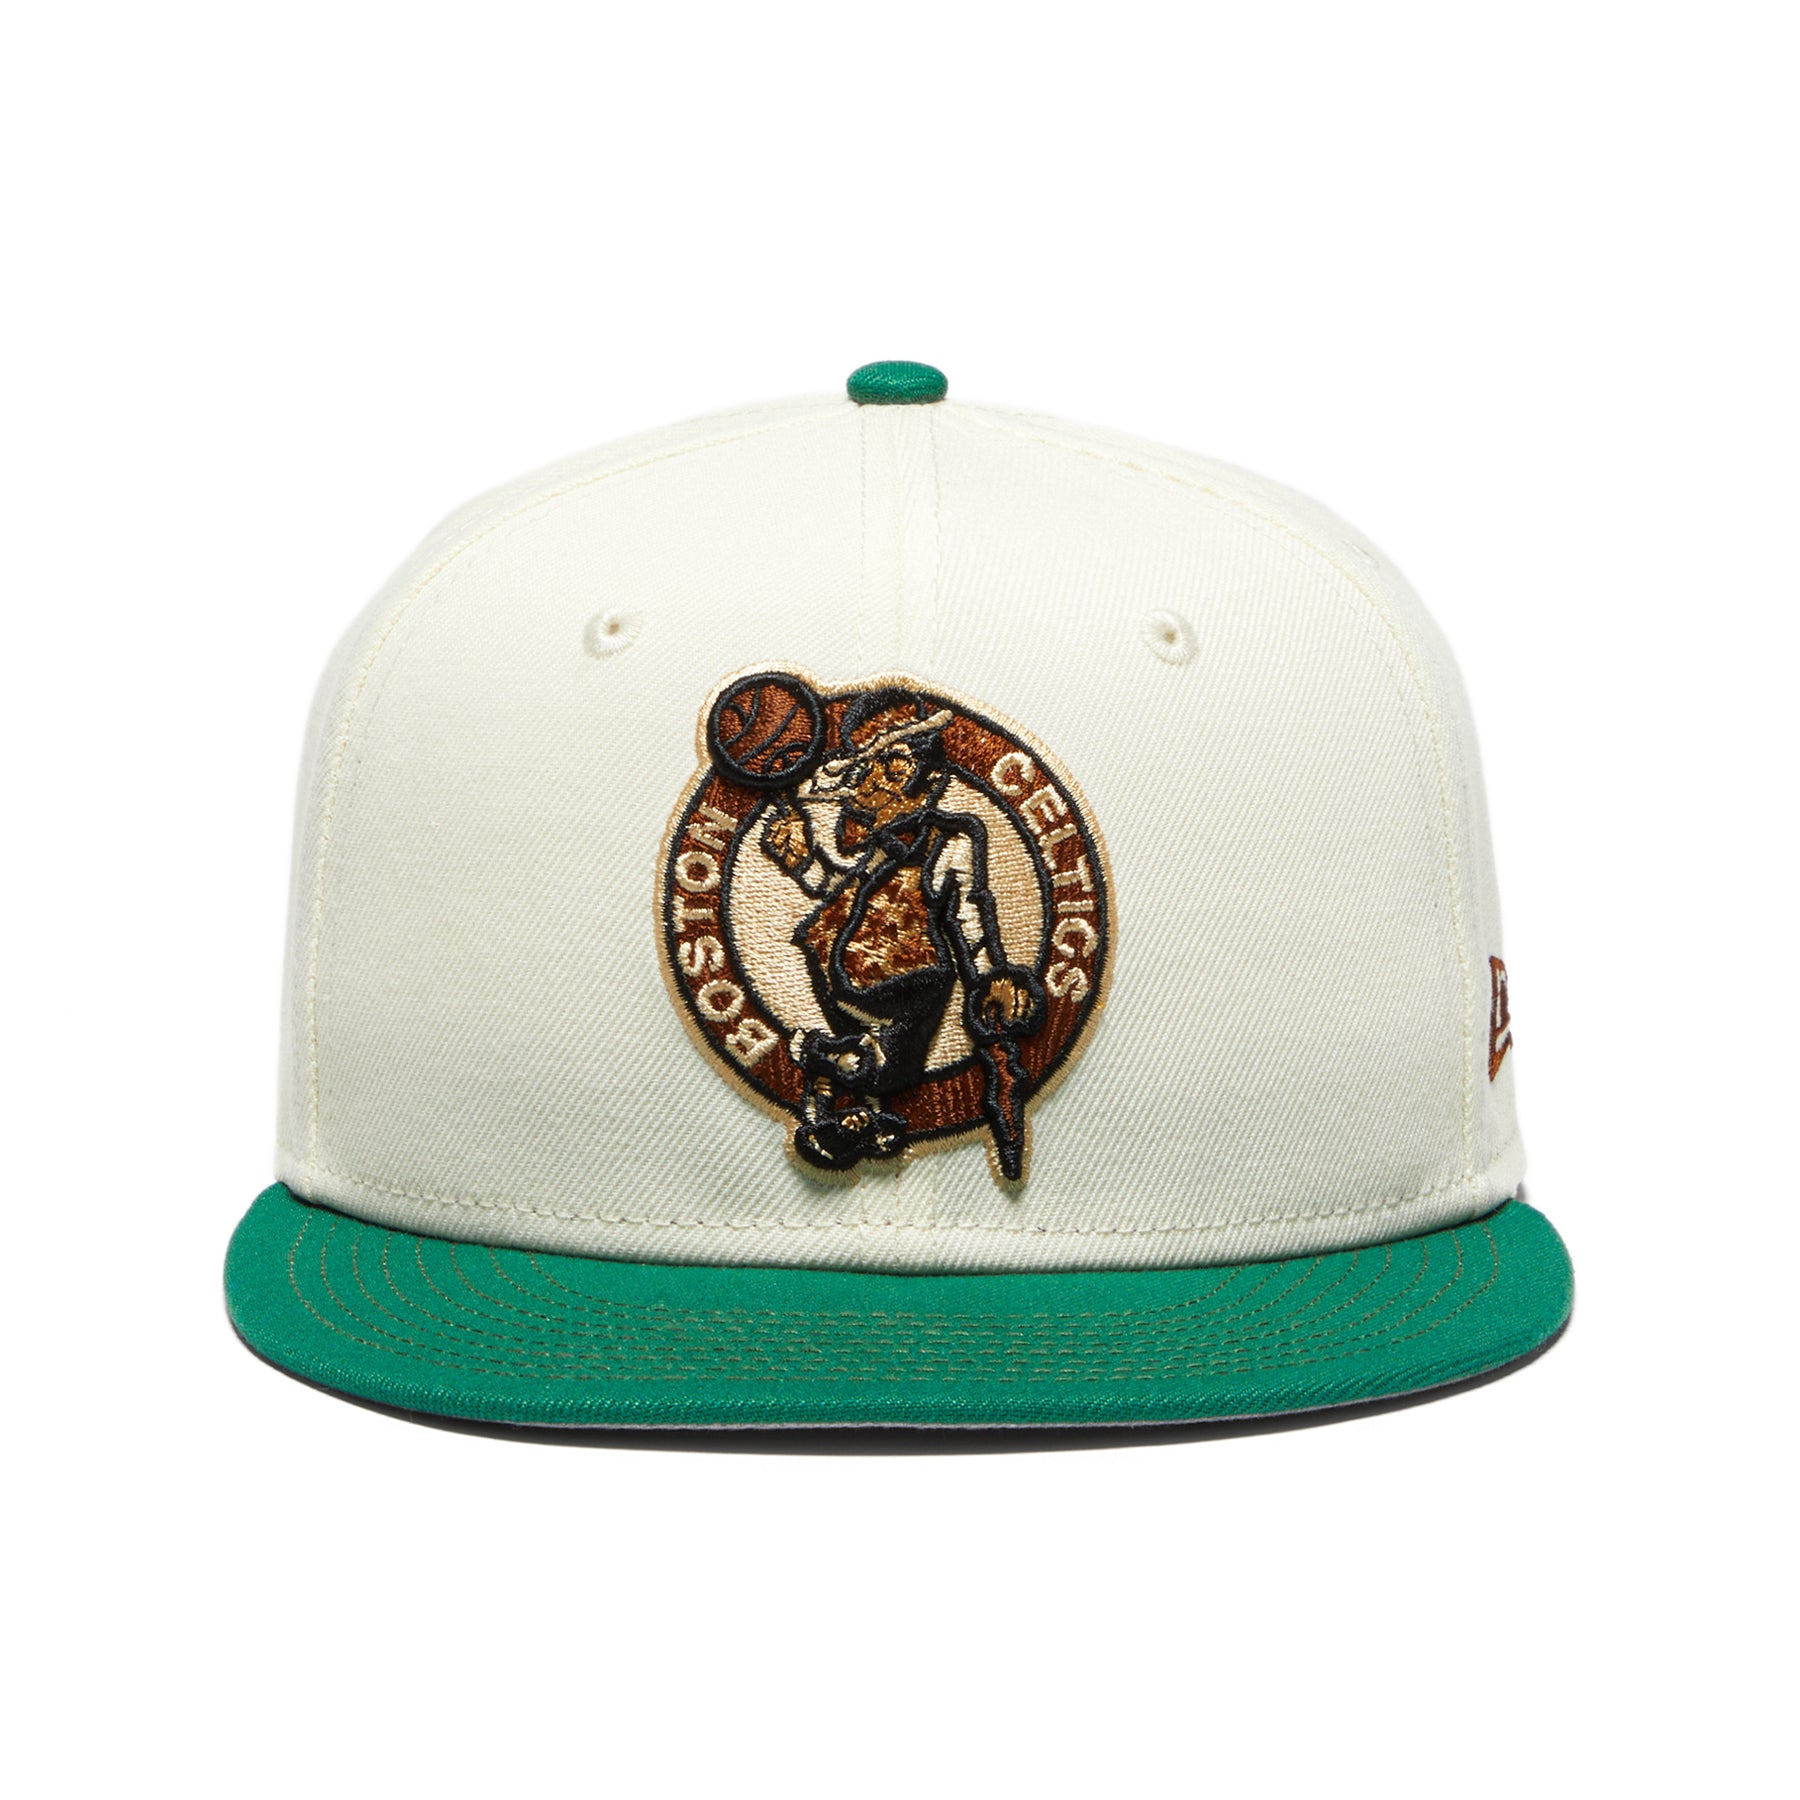 New Era Boston Celtics 59FIFTY Fitted Hat (White/Green) 7 1/2